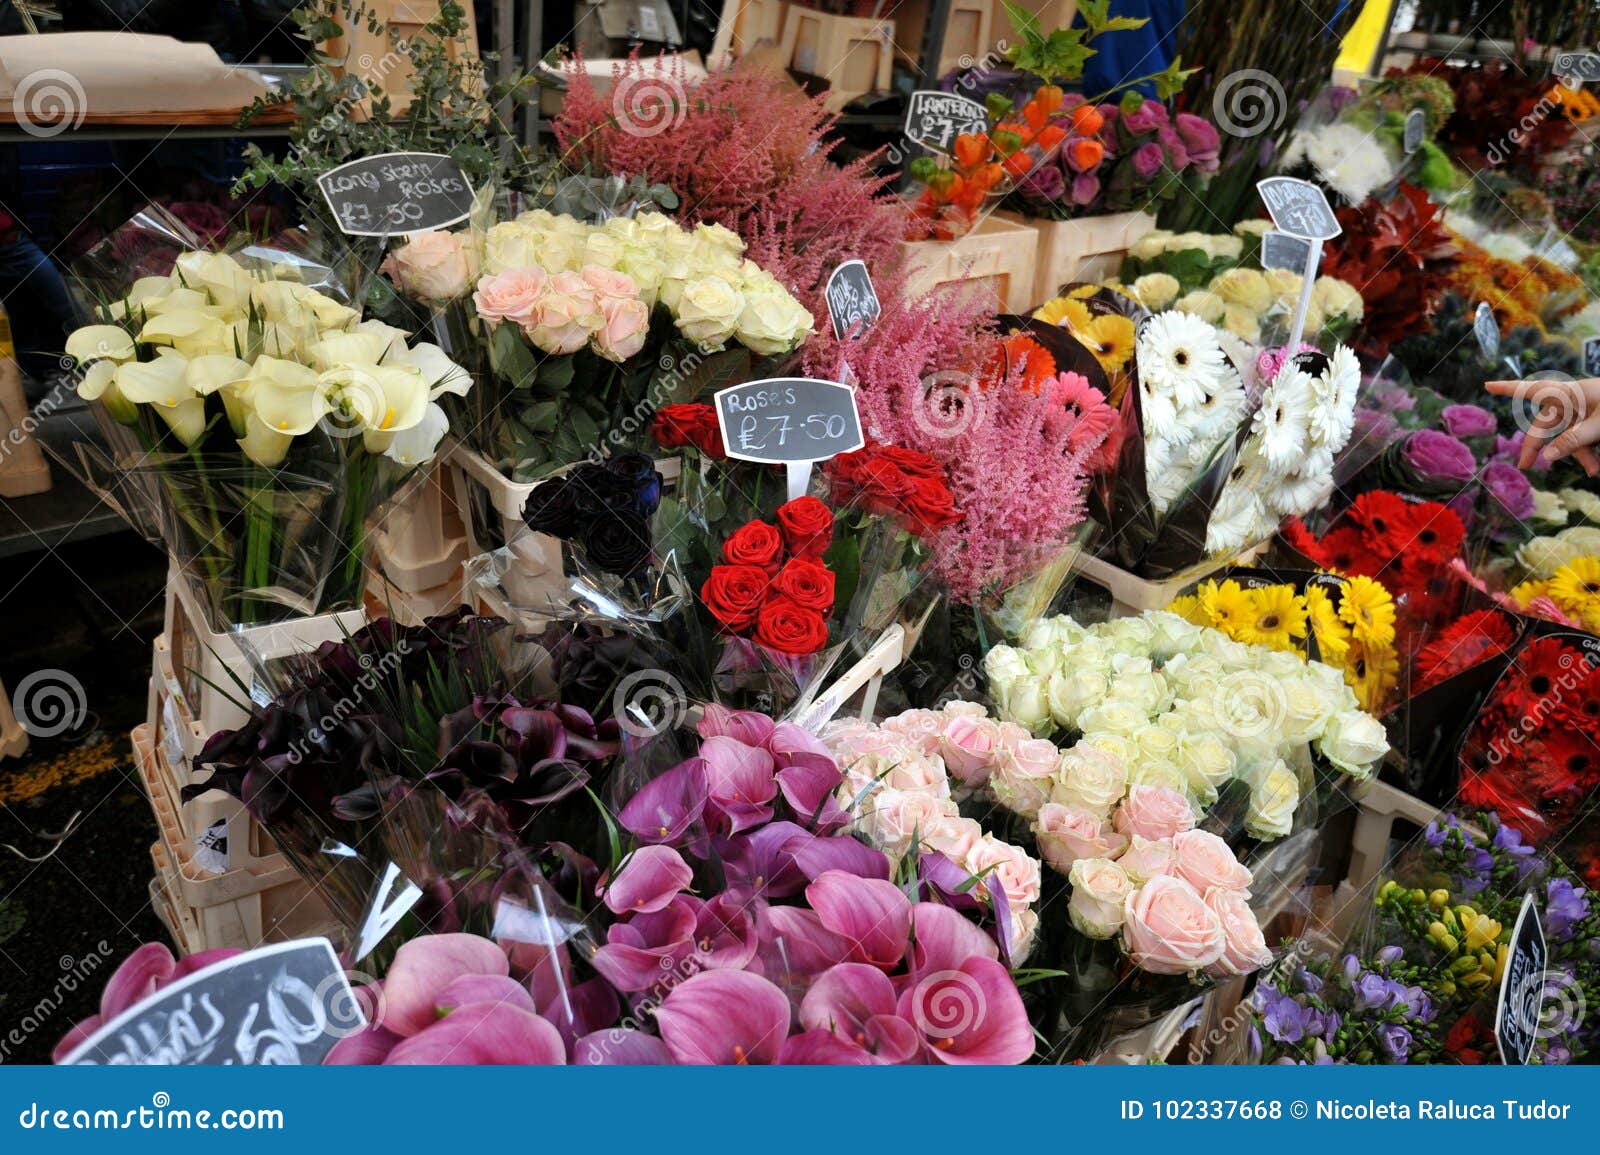 Columbia Road Flower Market London , Uk Editorial Stock Photo - Image ...